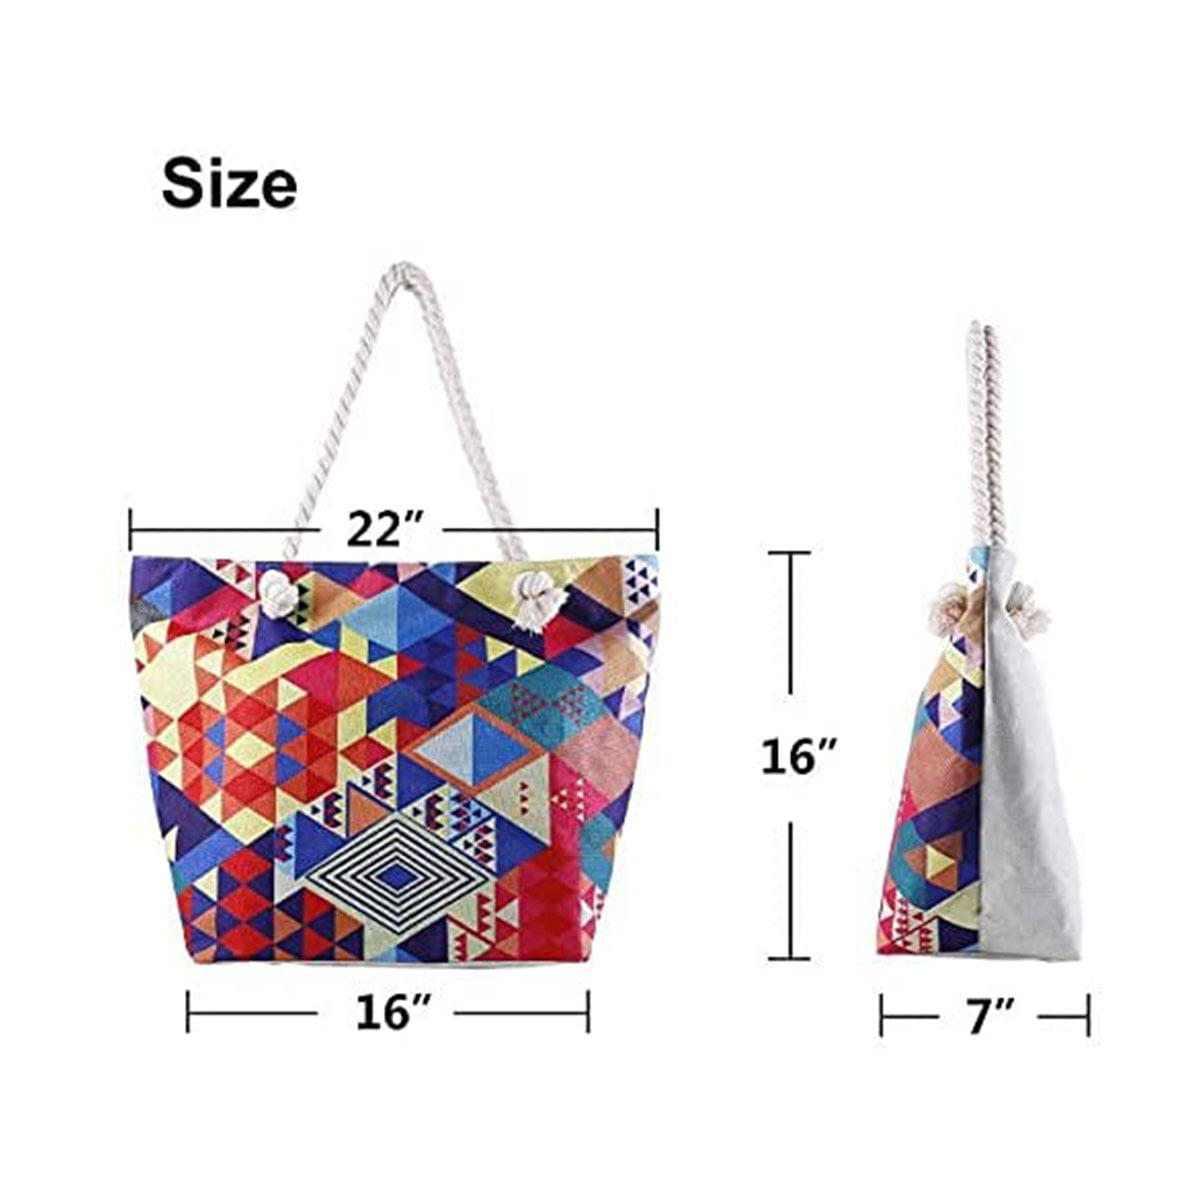 Pxymoer Extra Large Beach Bags Totes Women Waterproof Sandproof Big Tote Bag Zipper Inner Pockets Rope Handle Canvas with Zip Closure Swim Pool Gym